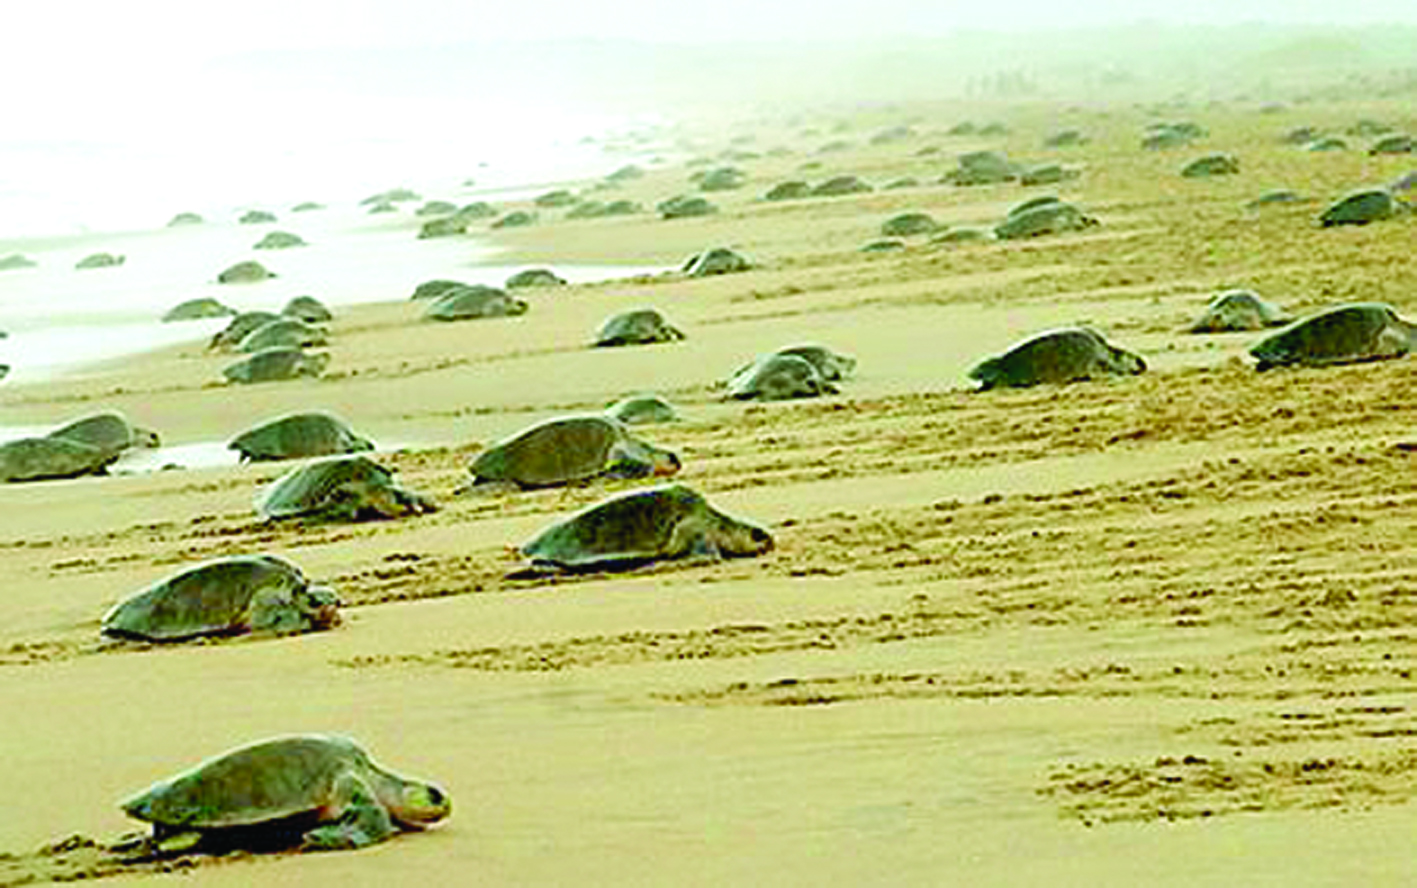 Olive ridley sea turtle, Morjim Beach, Goa